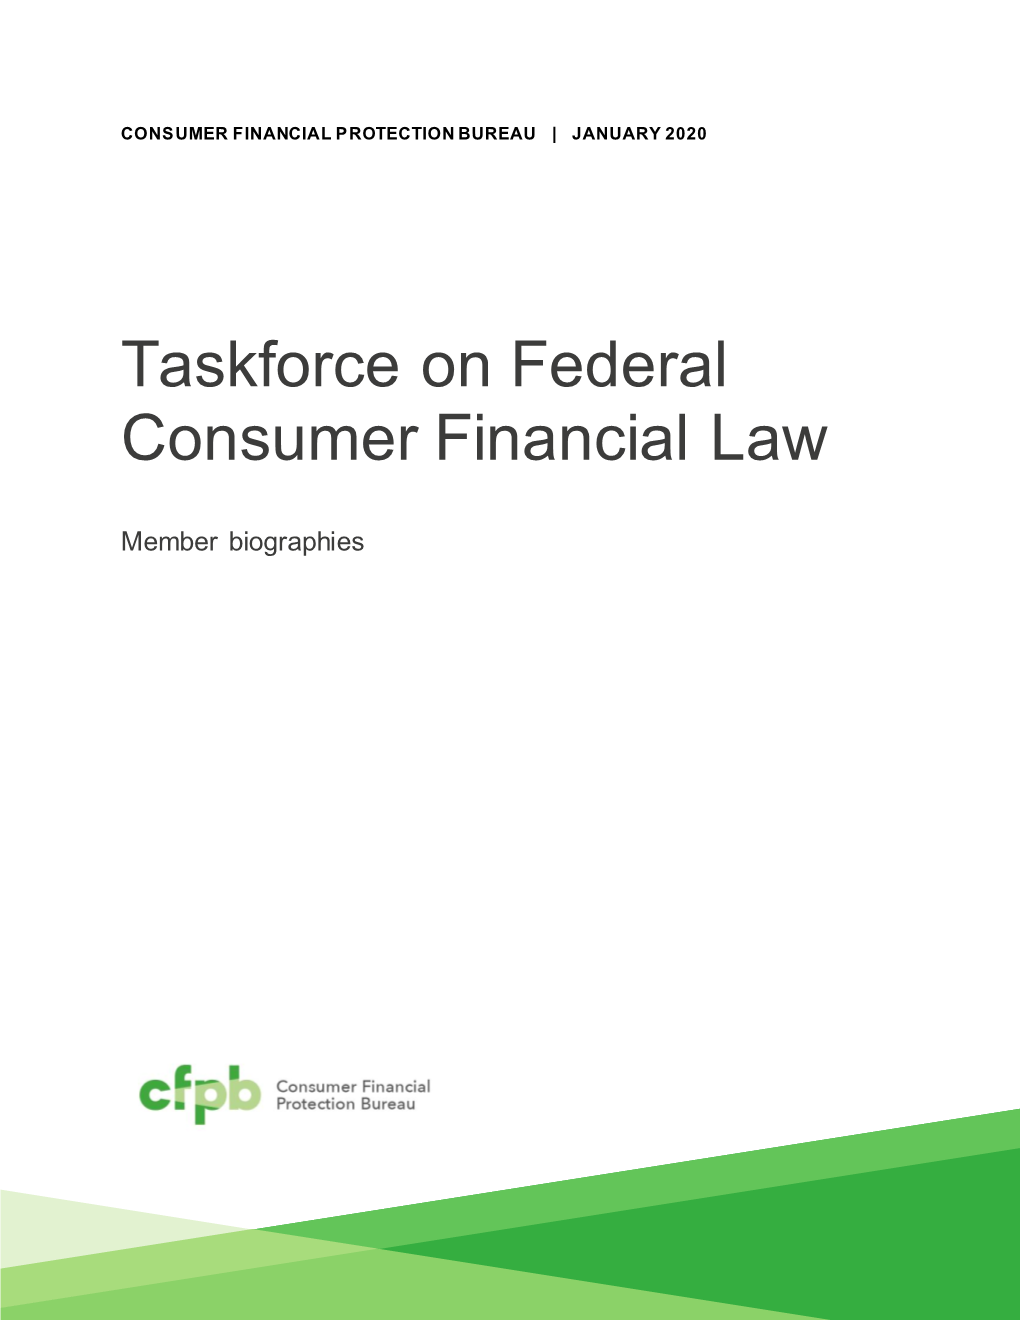 Taskforce on Federal Consumer Financial Law